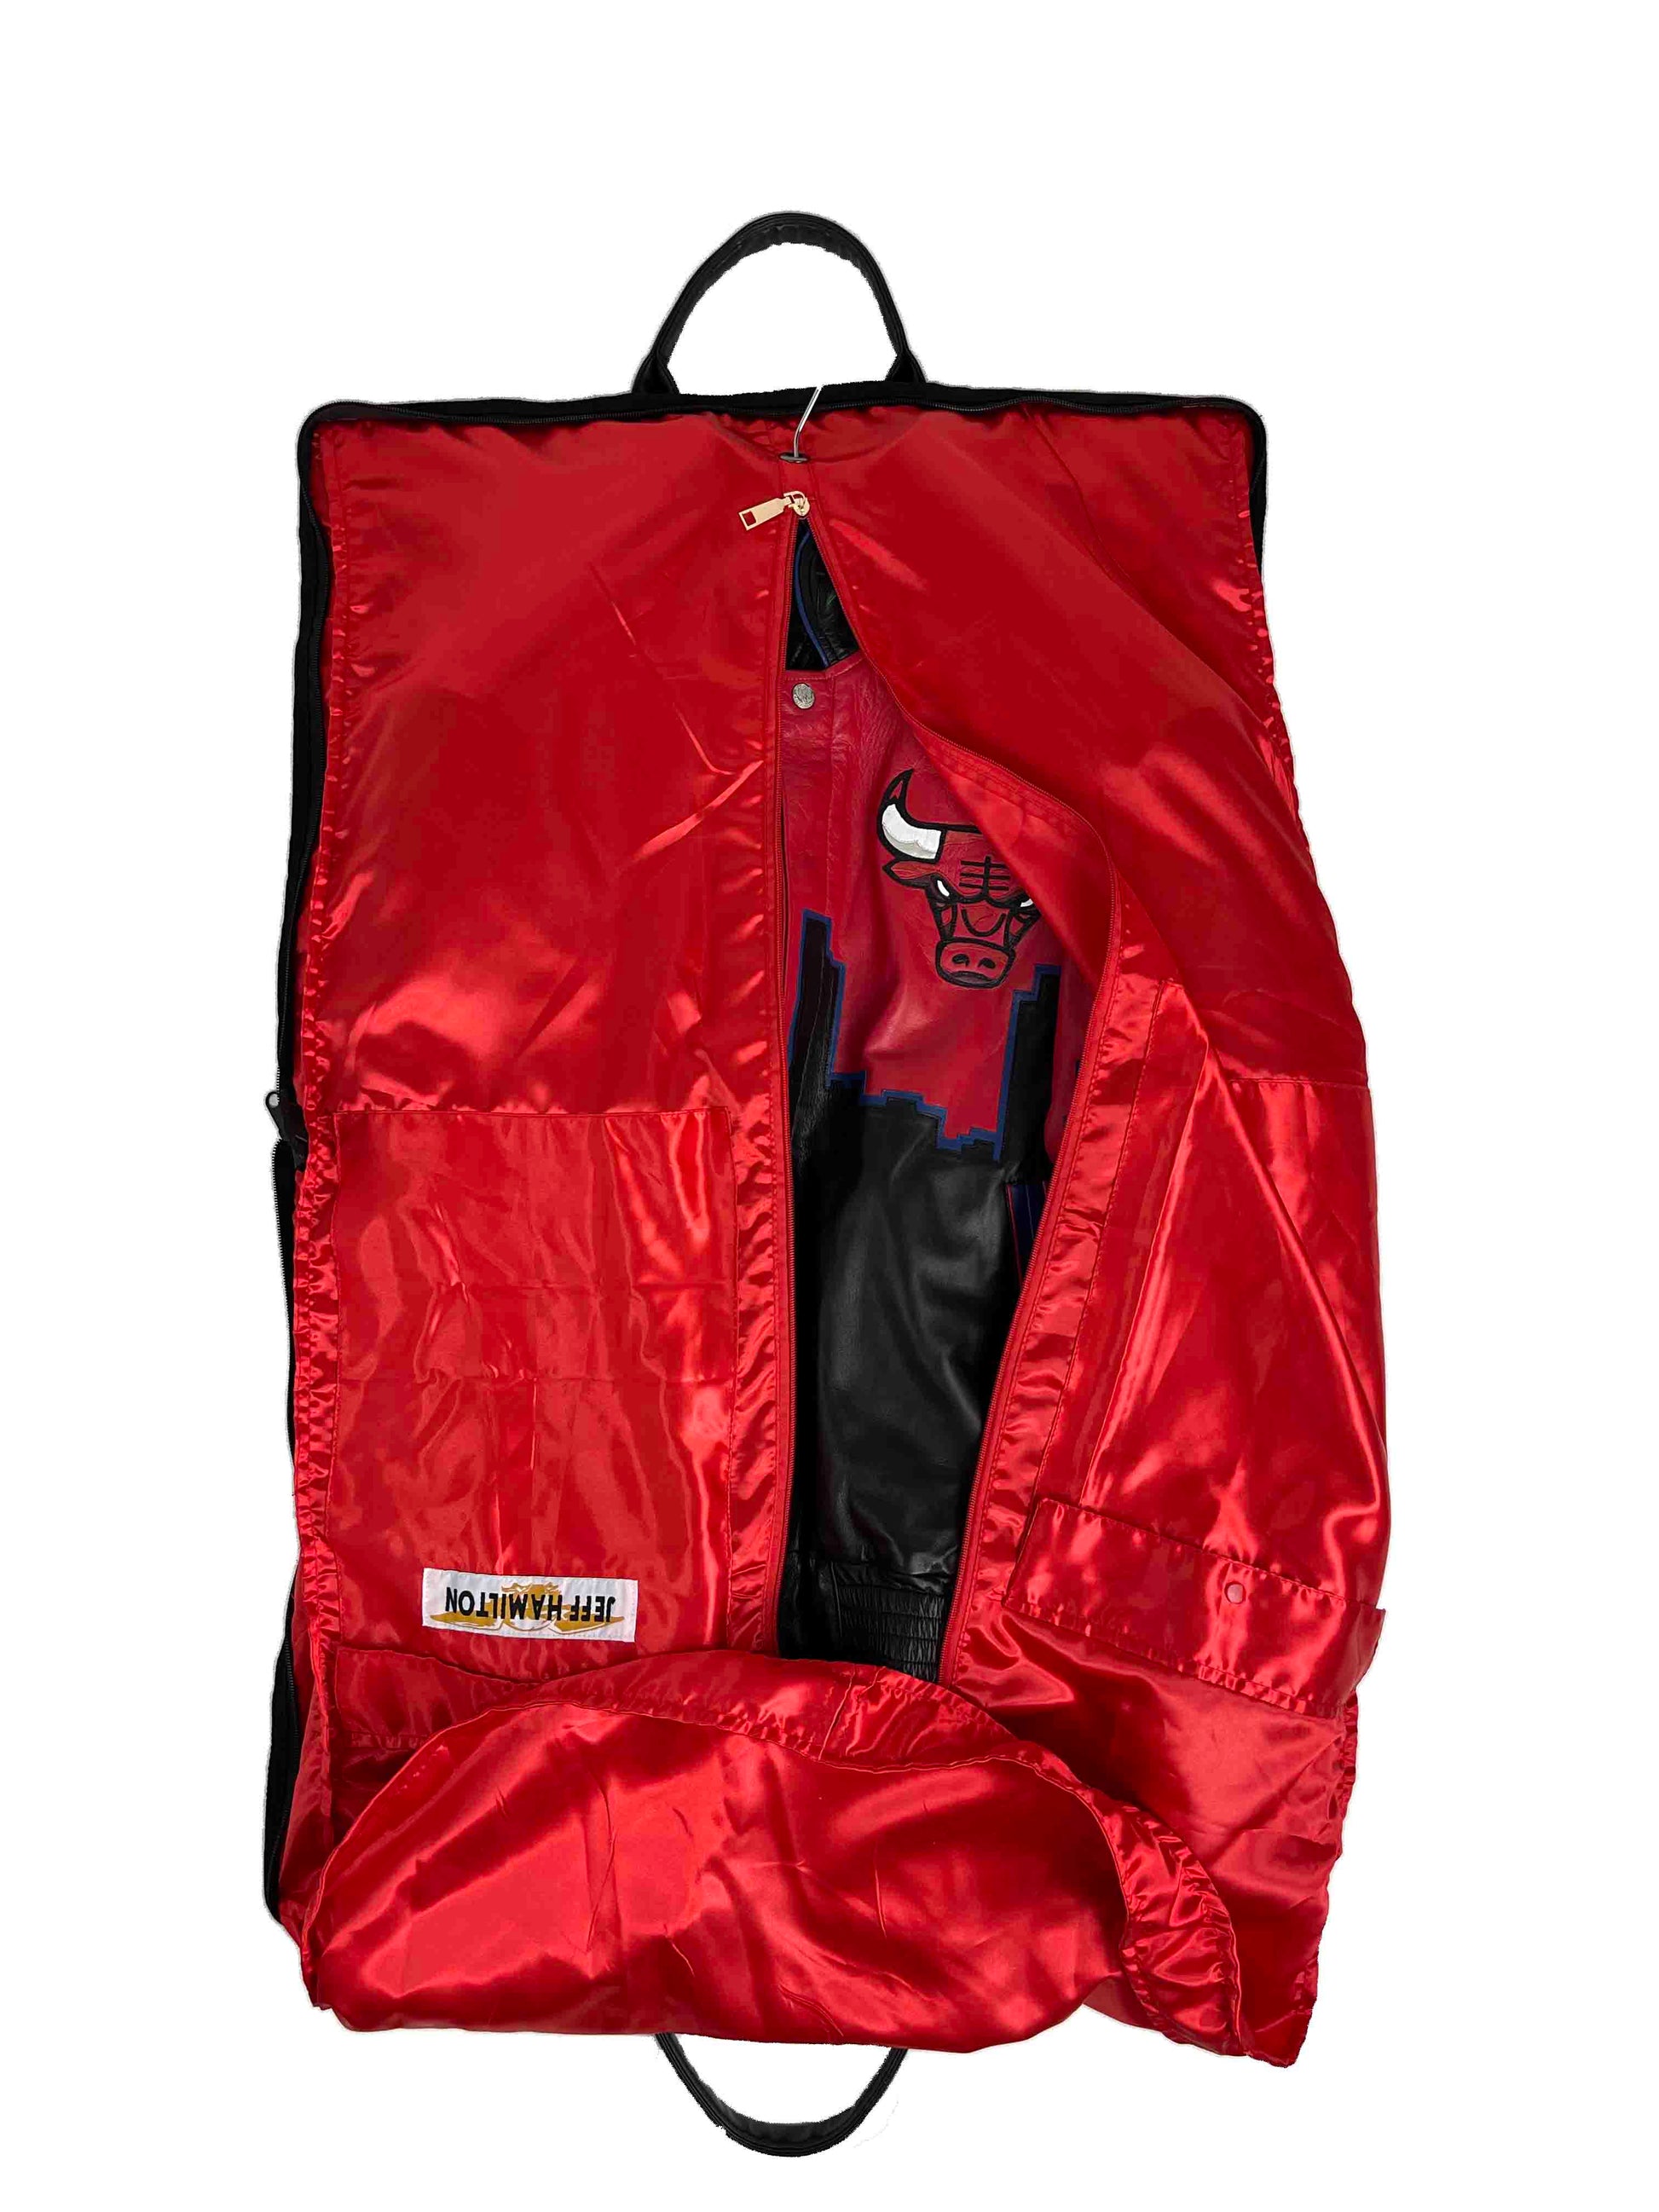 Jeff Hamilton Garment Bag